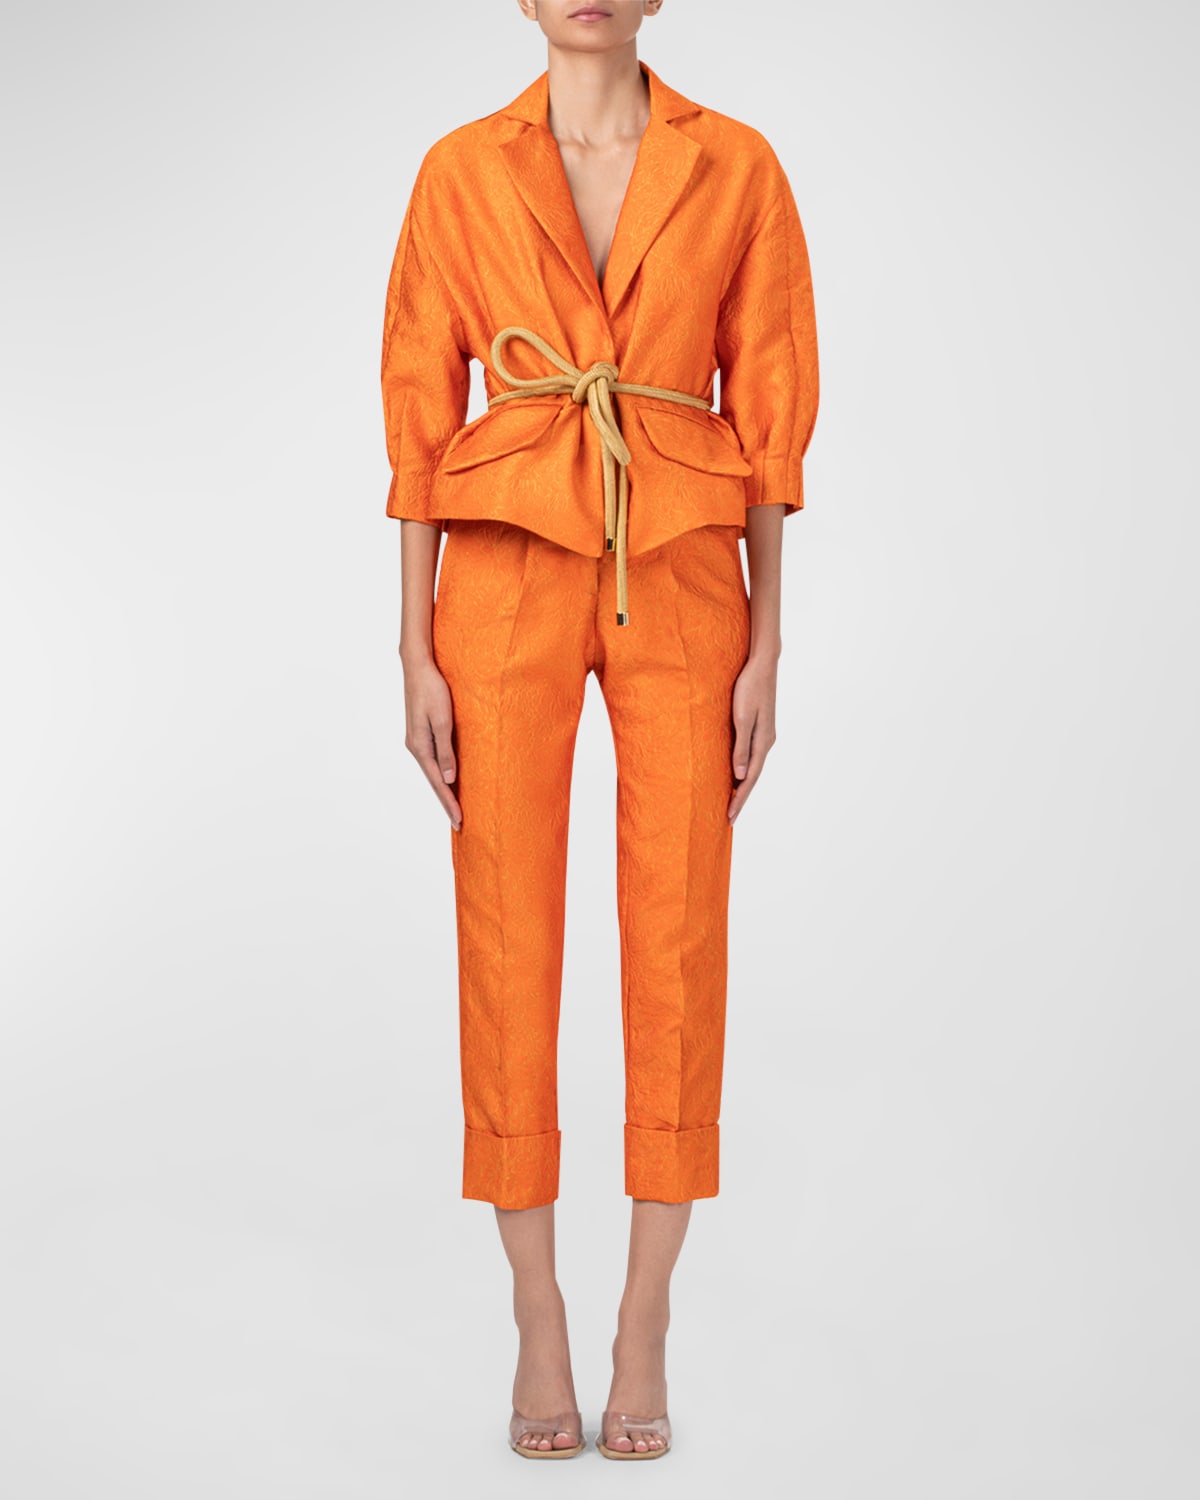 Silvia Tcherassi Gianna Jacquard Jacket With Rope Belt In Orange Petal